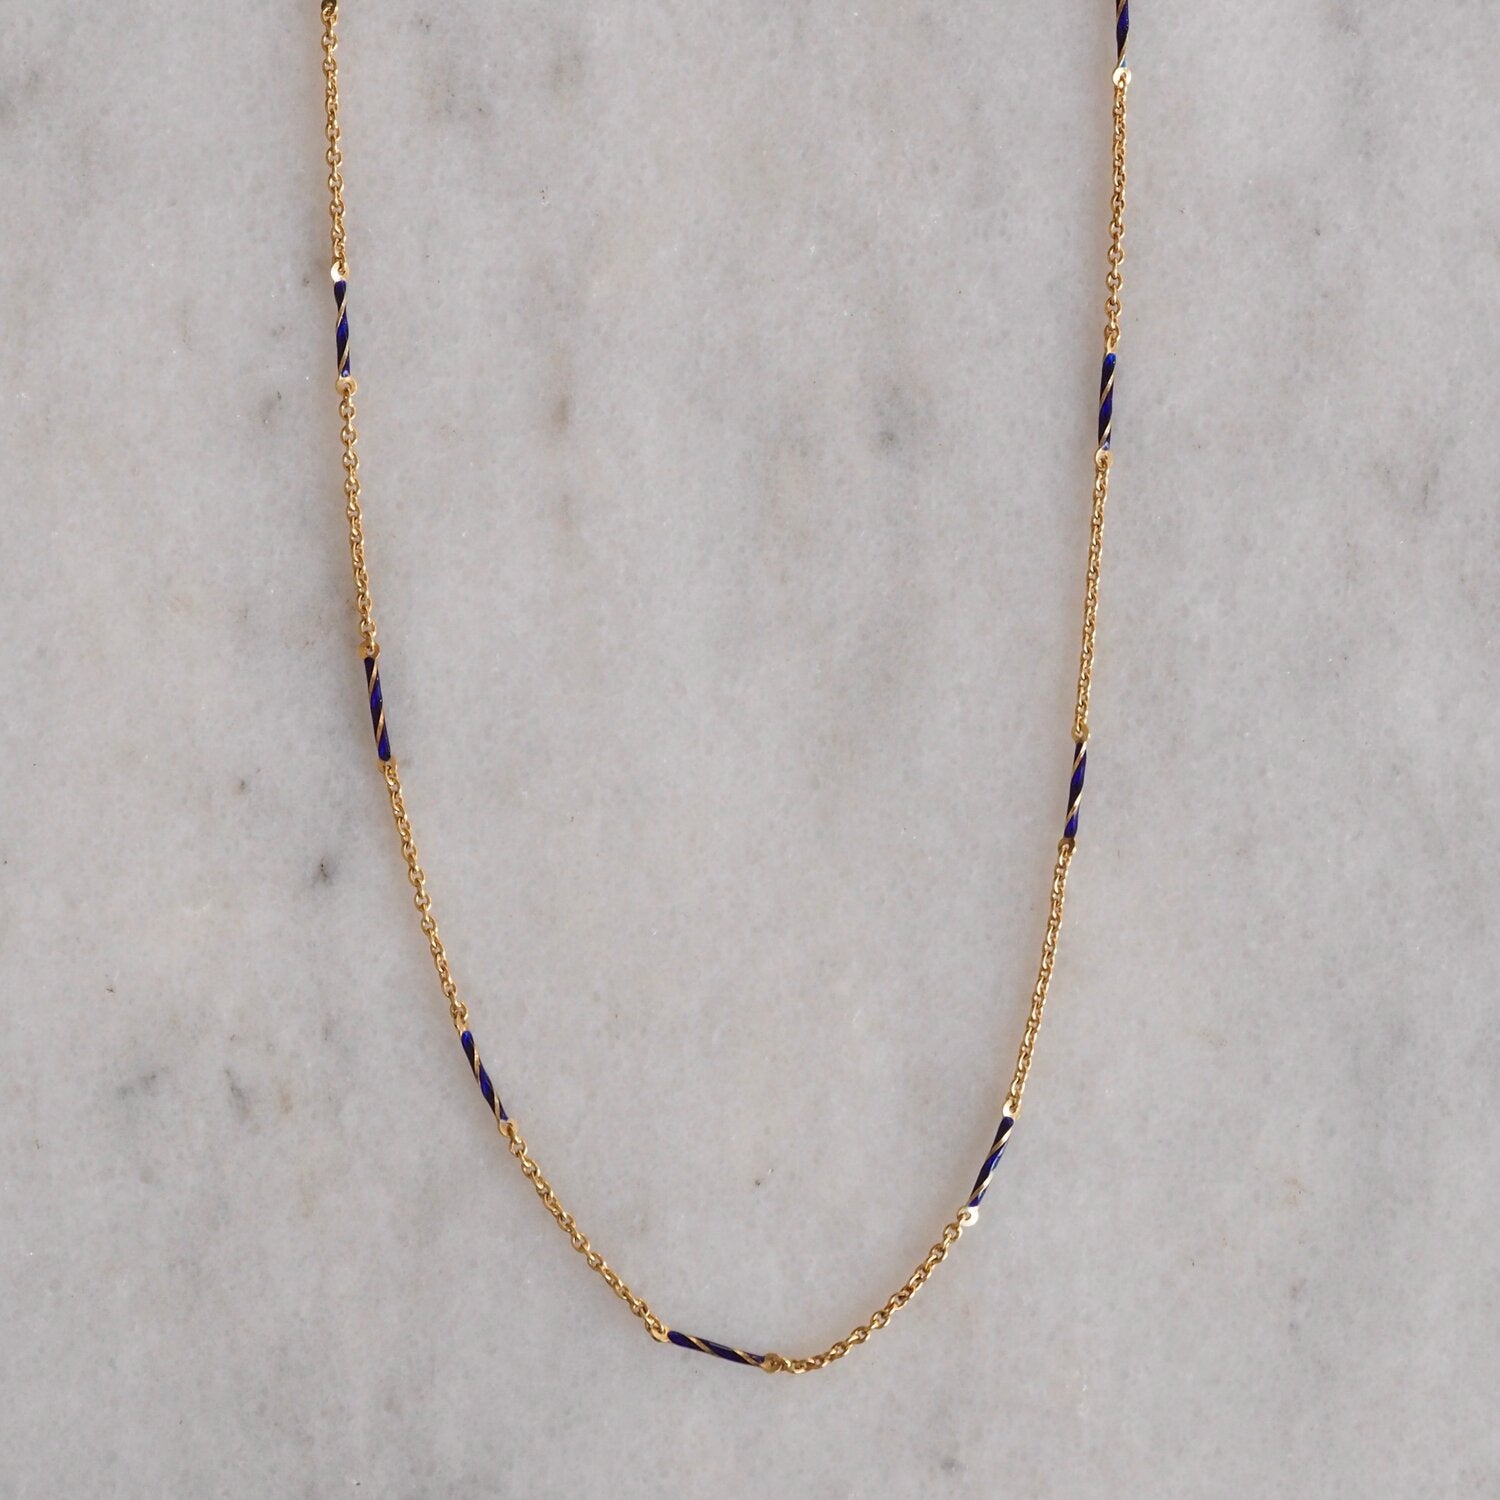 Antique 14k Gold Enamel Station Link Chain Necklace